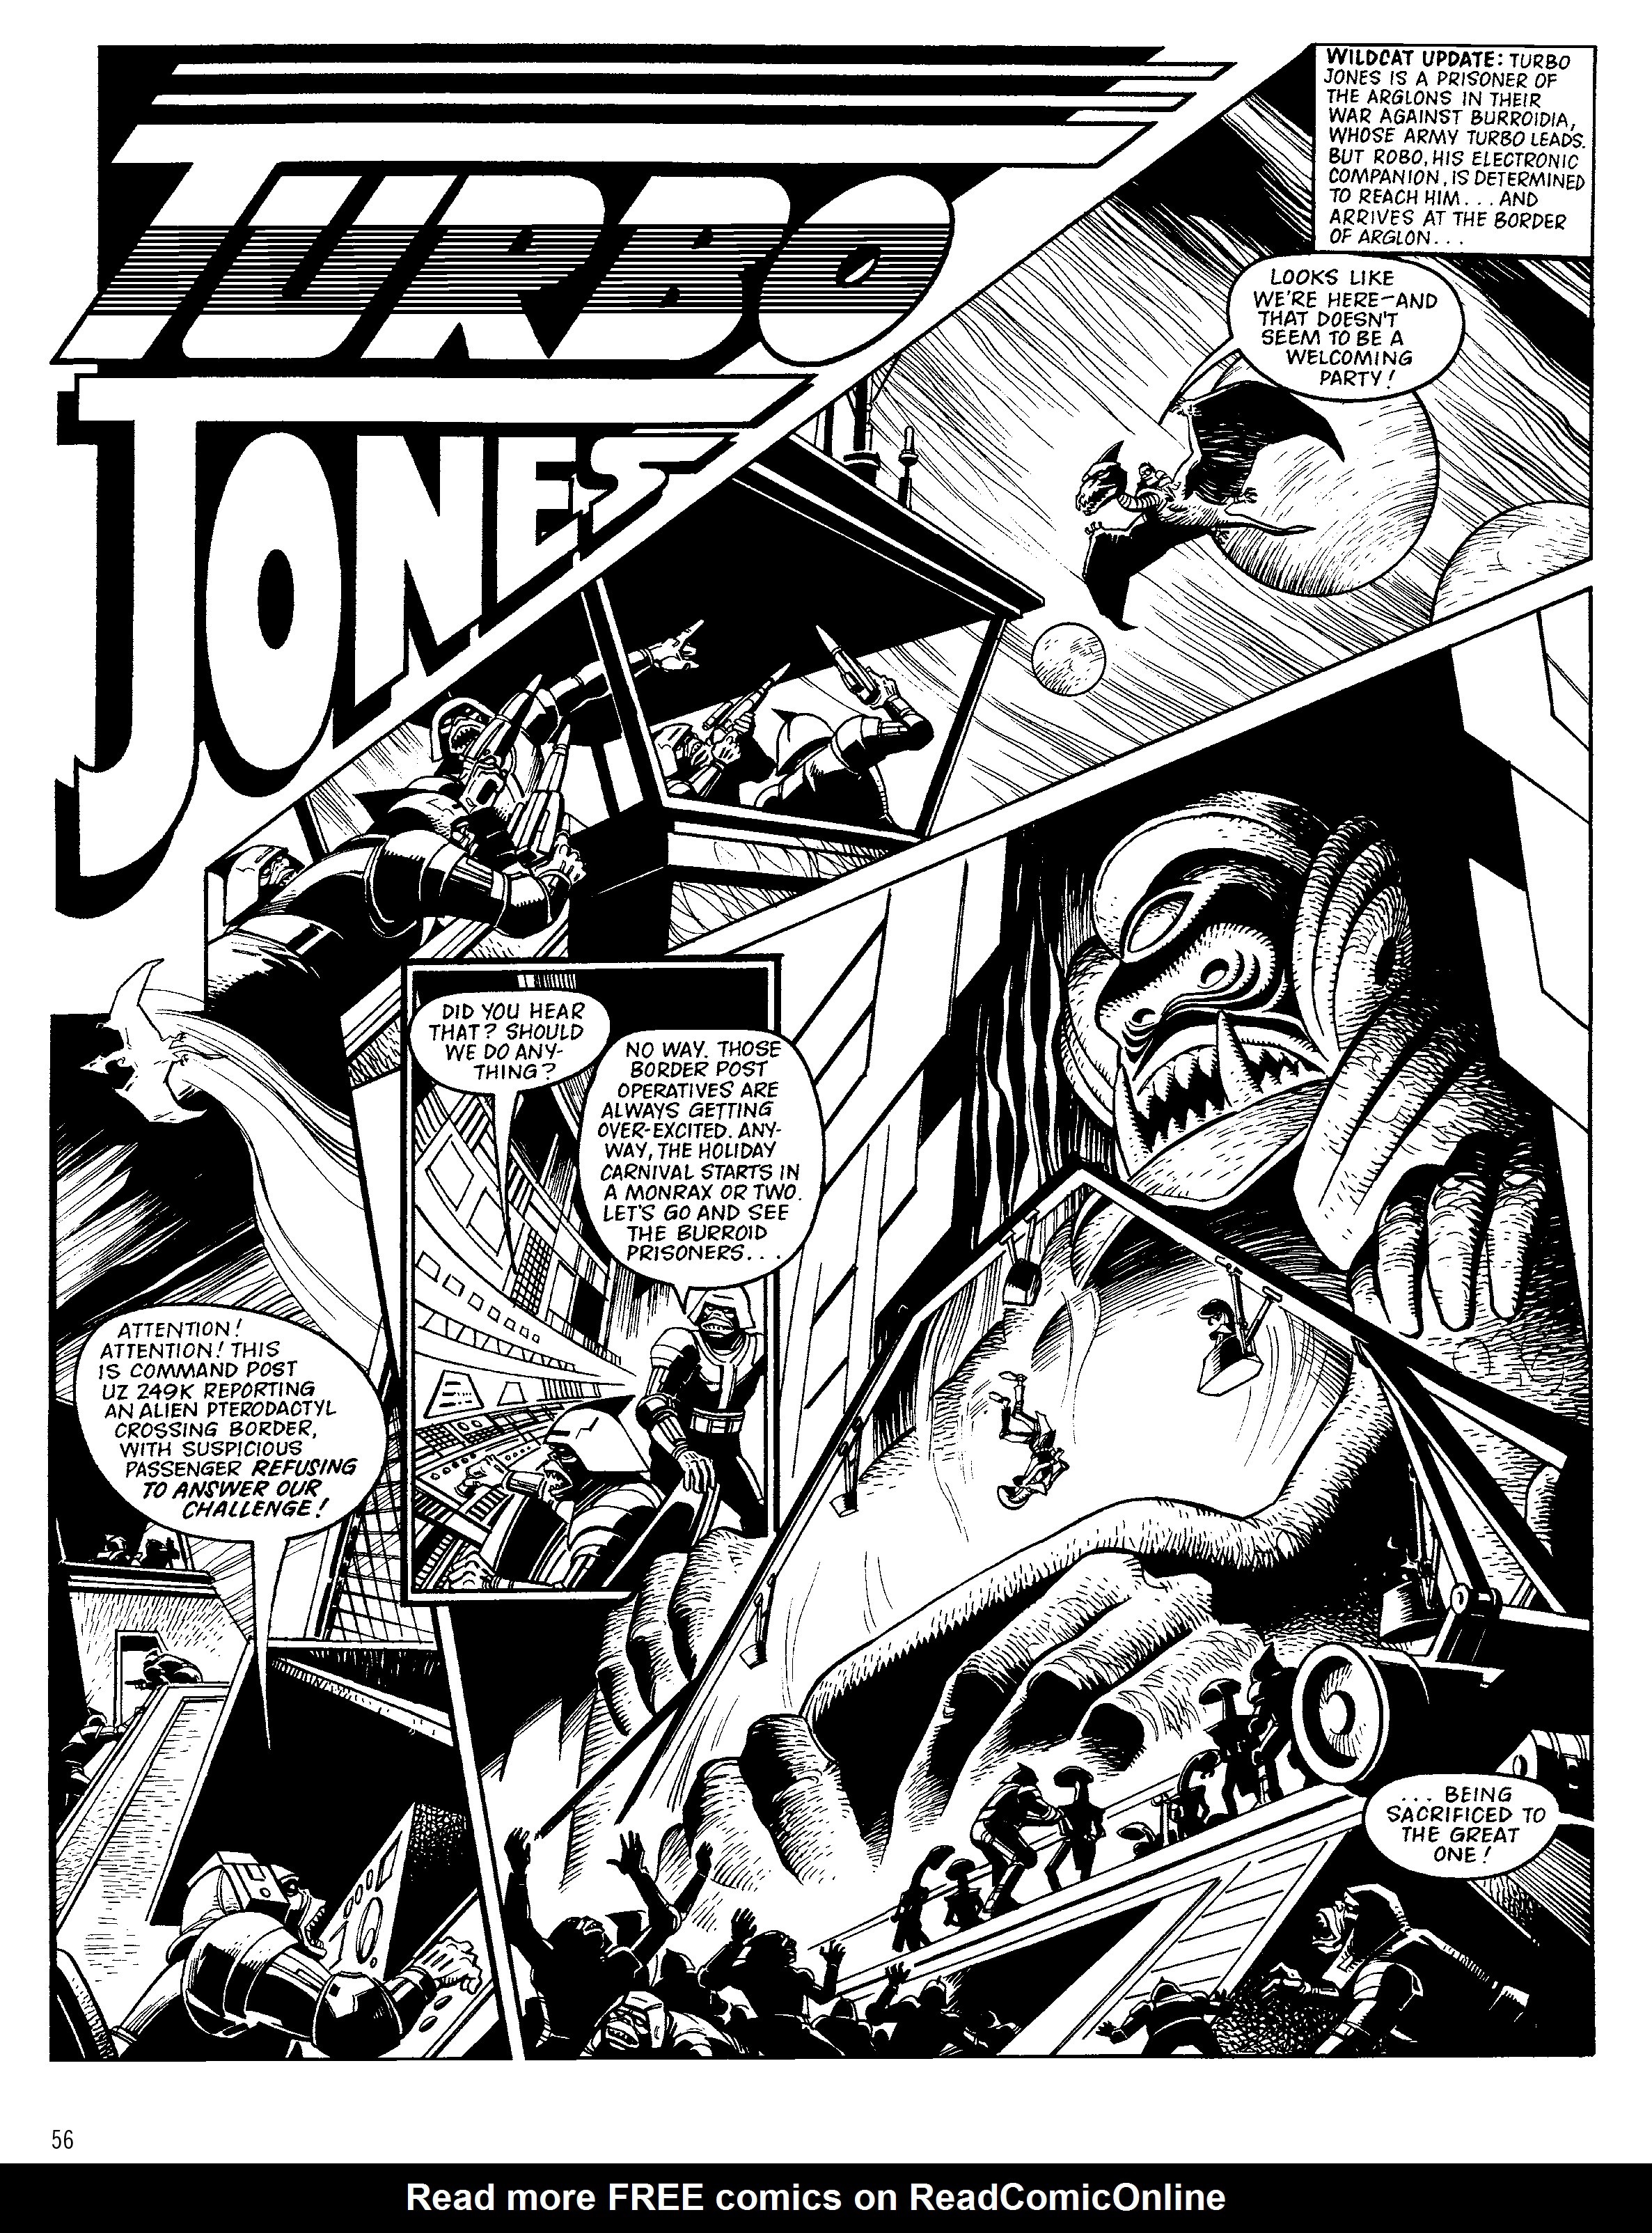 Read online Wildcat: Turbo Jones comic -  Issue # TPB - 57